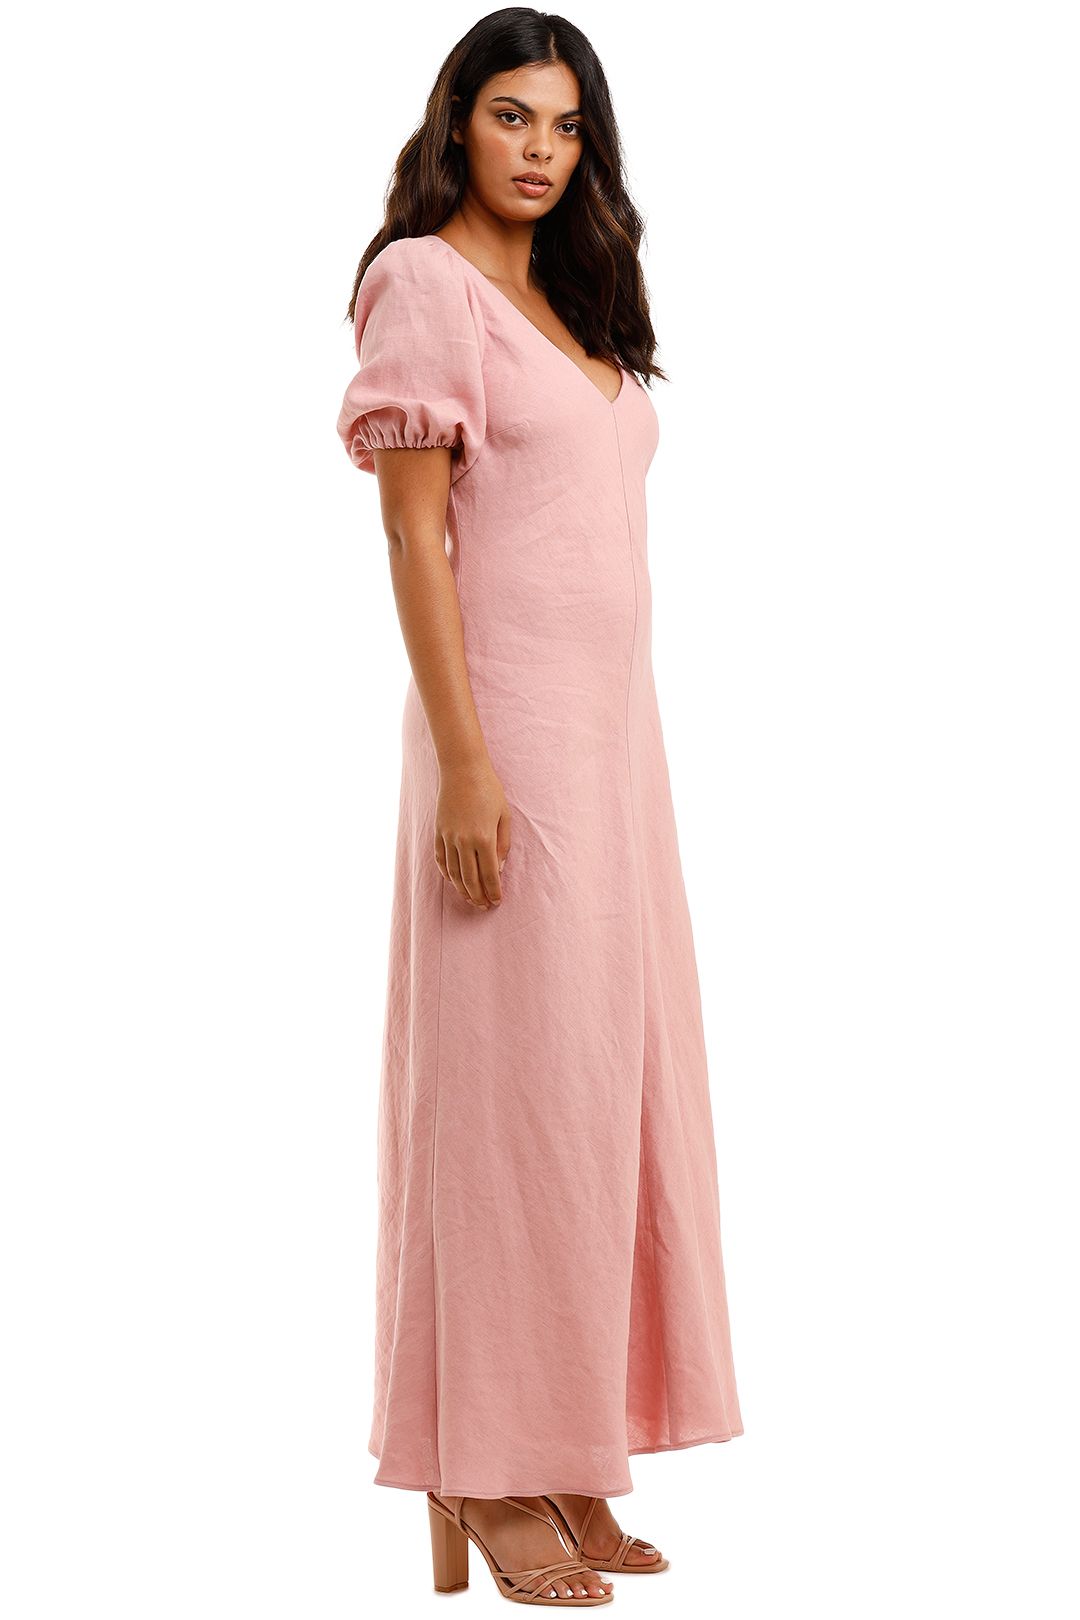 Jillian Boustred Phillipa Dress Pink Bias Cut